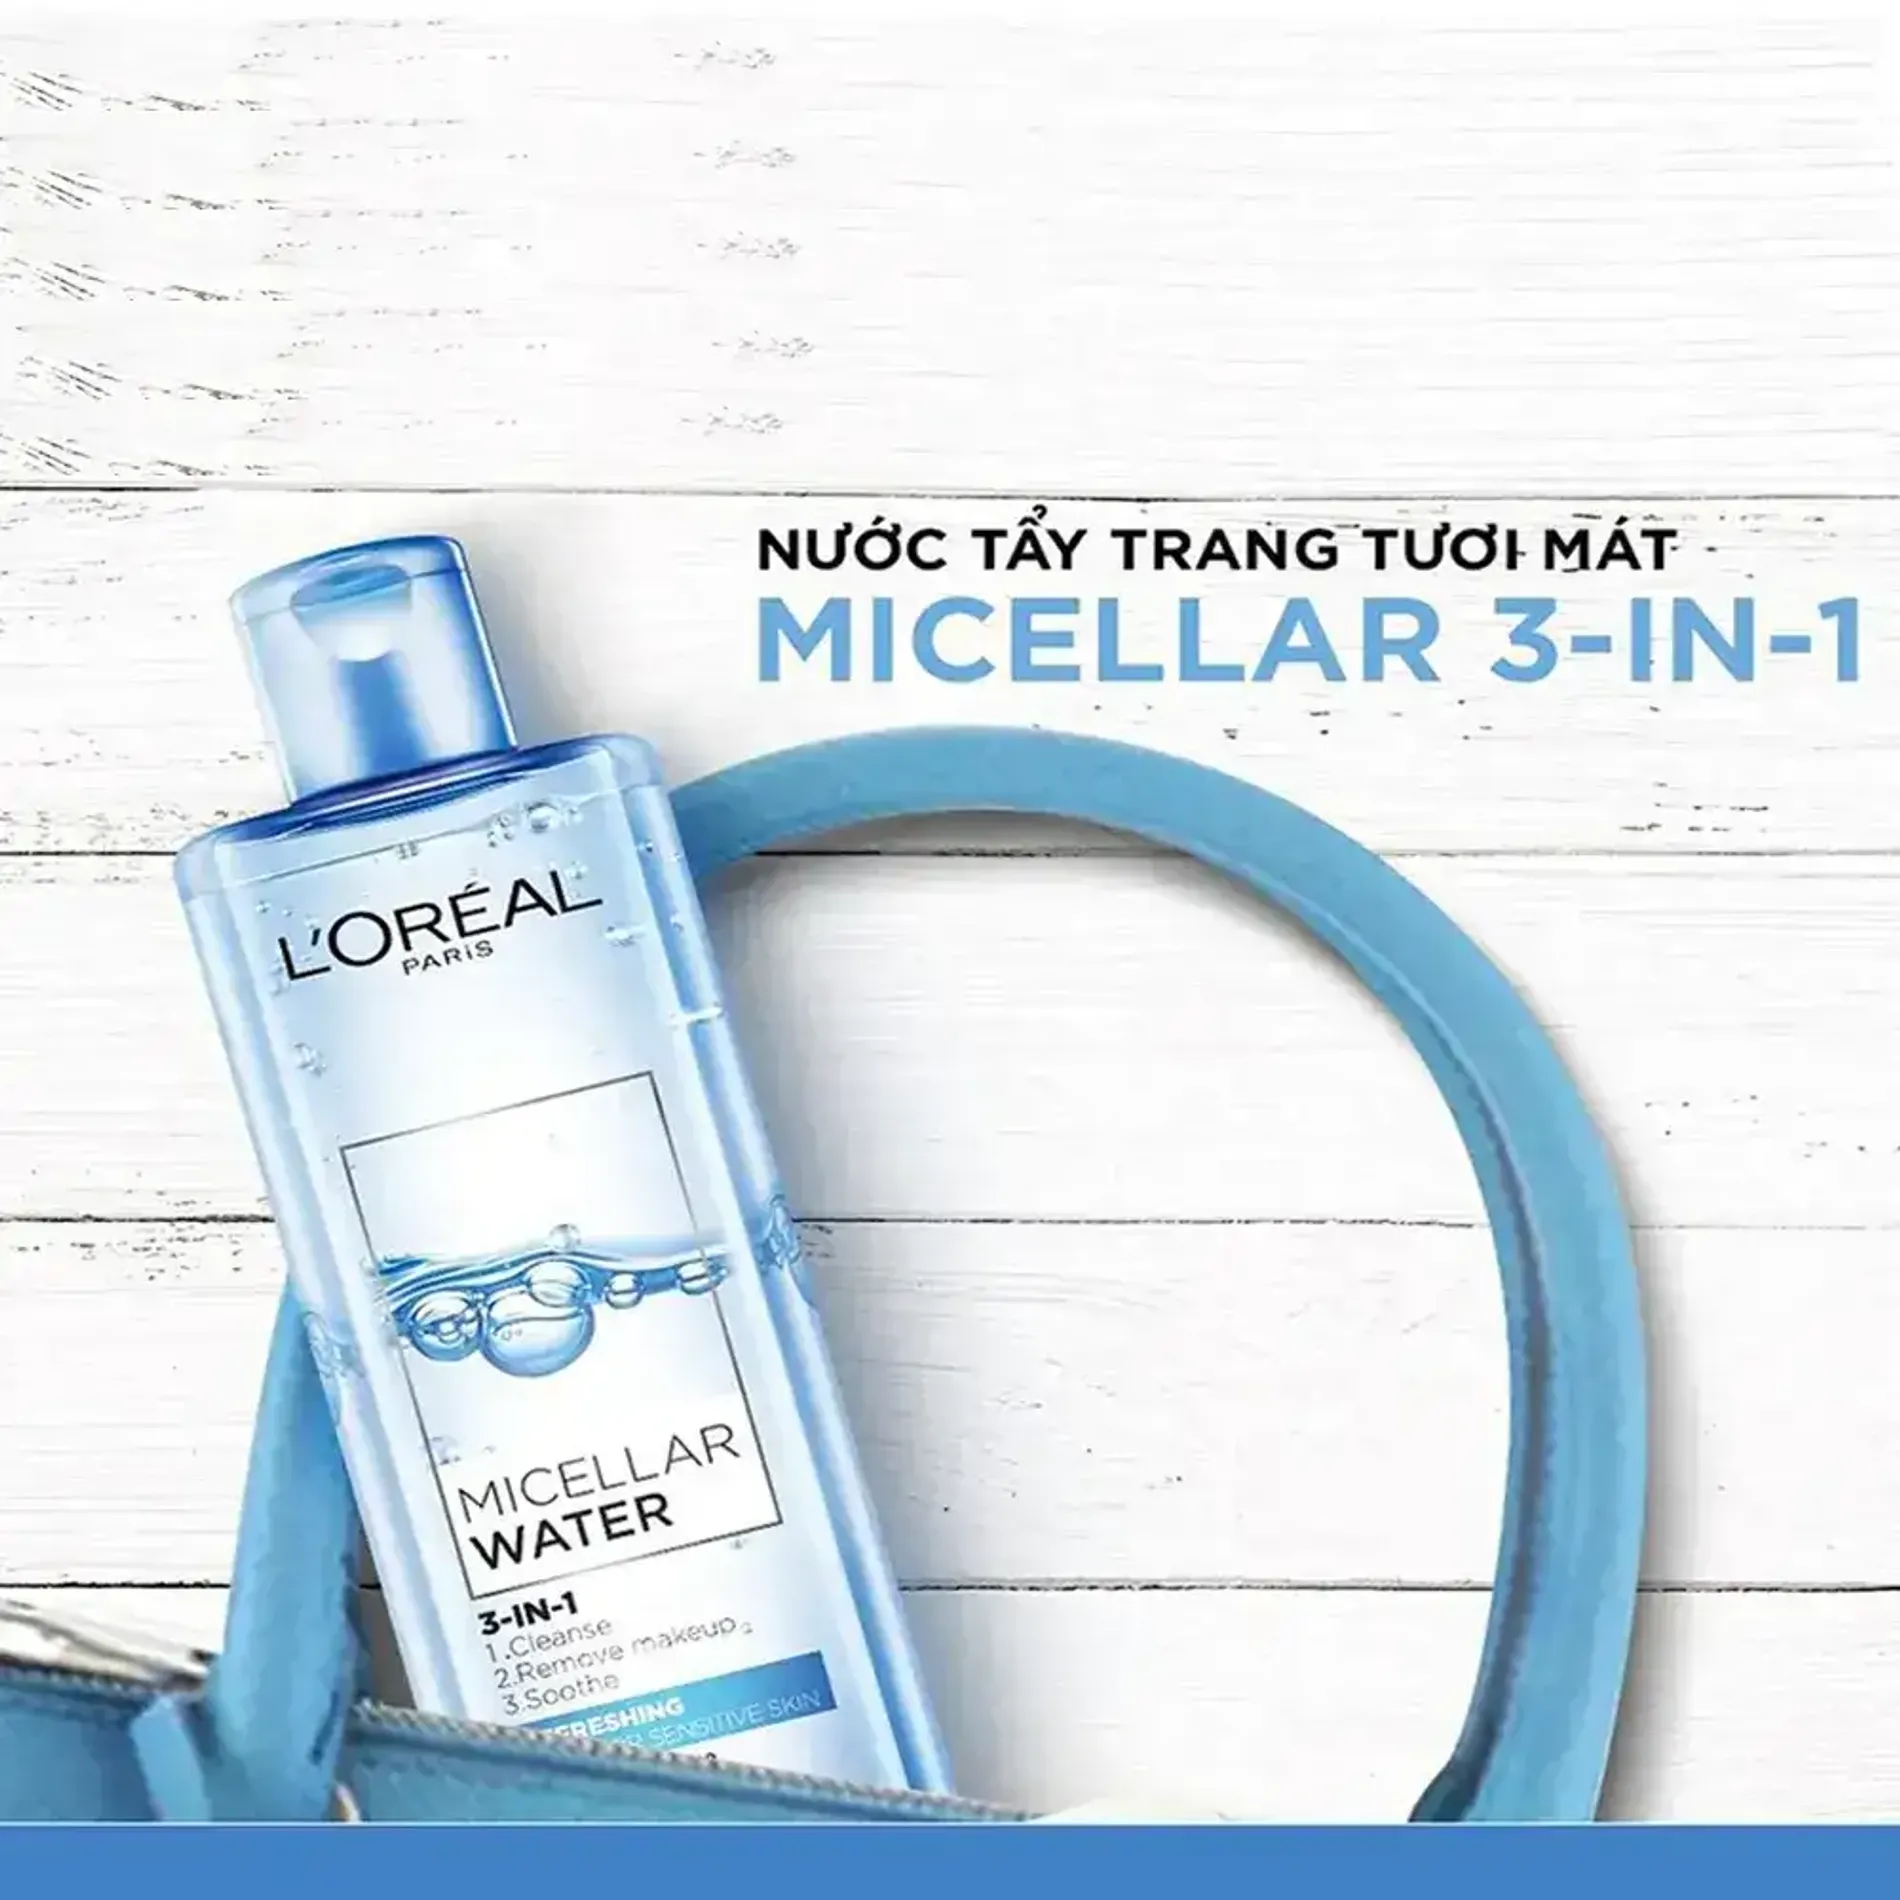 nuoc-tay-trang-l-oreal-micellar-water-refreshing-even-for-sensitive-skin-3